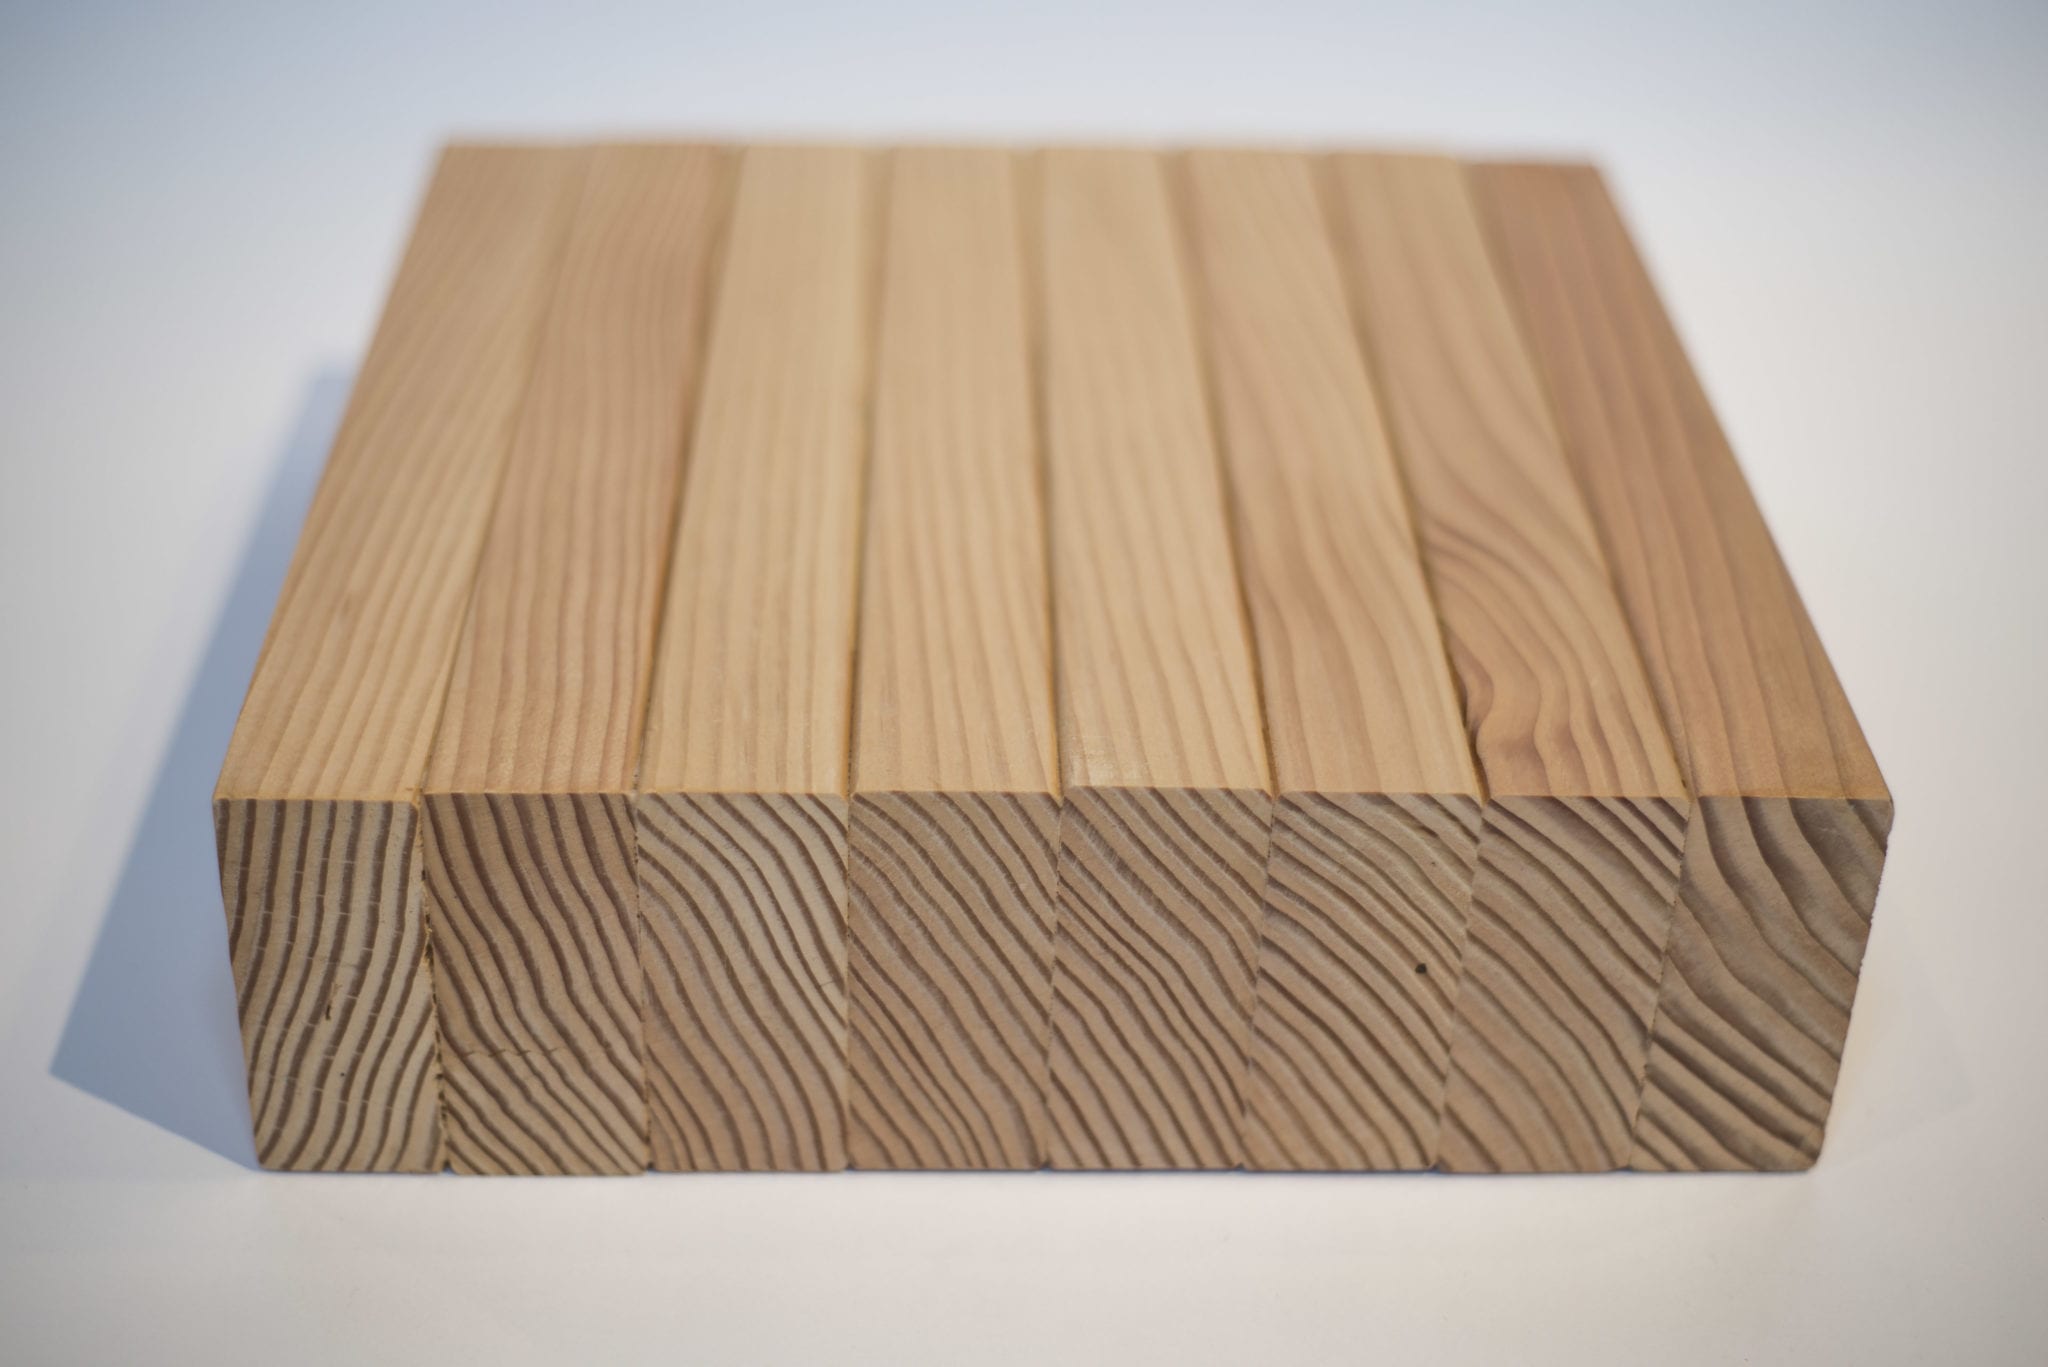 6. Nail-Laminated Timber Design and Construction Handbook - wide 8